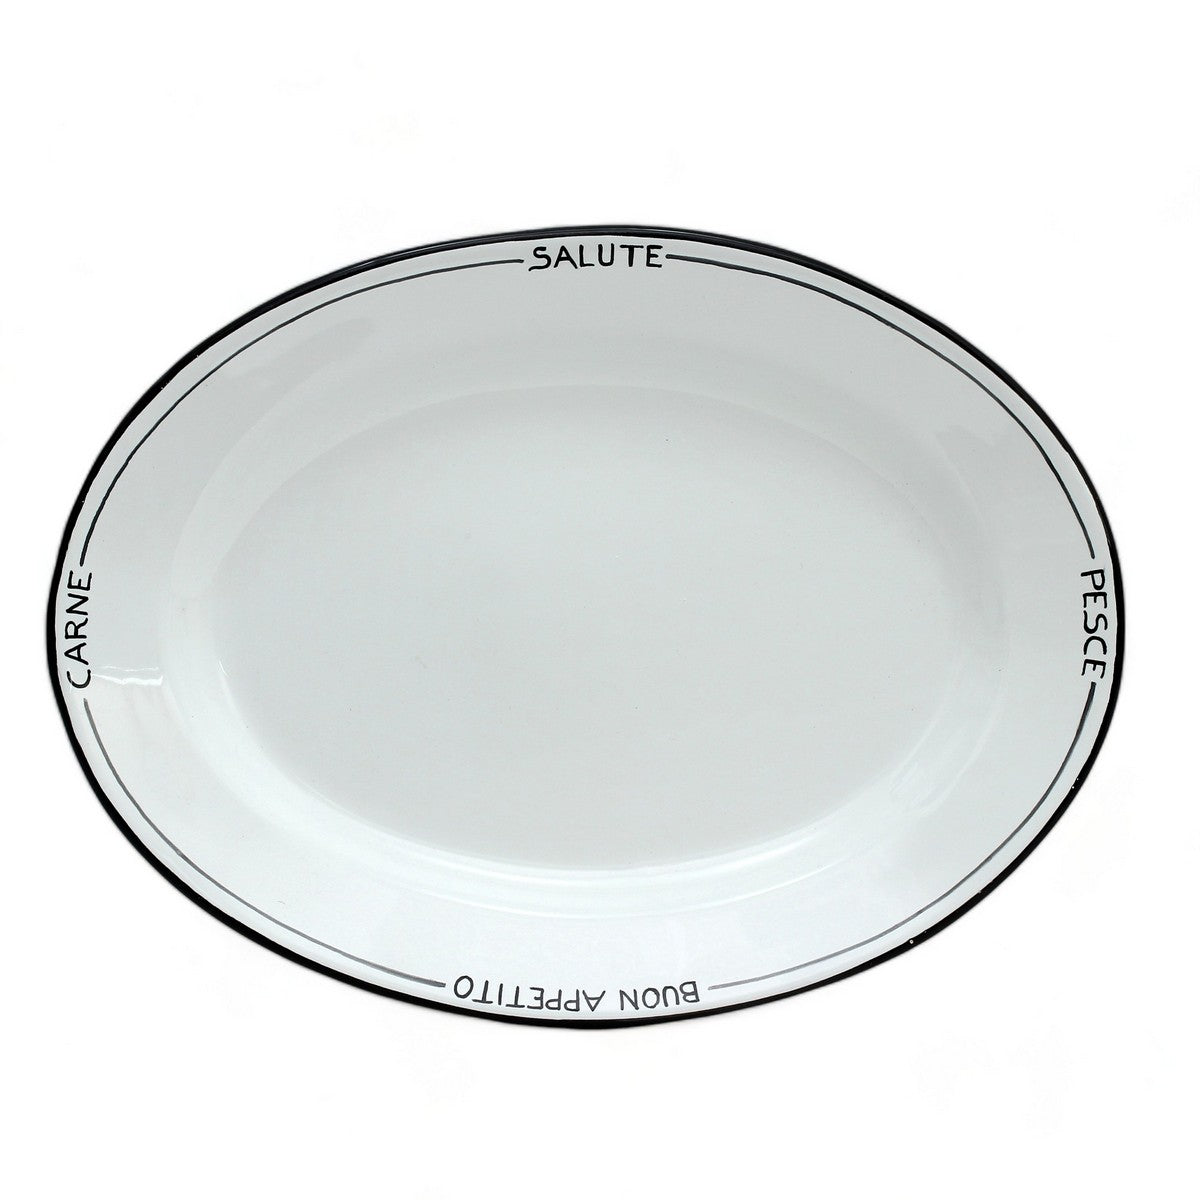 POSATA NERO: Oval Serving Platter